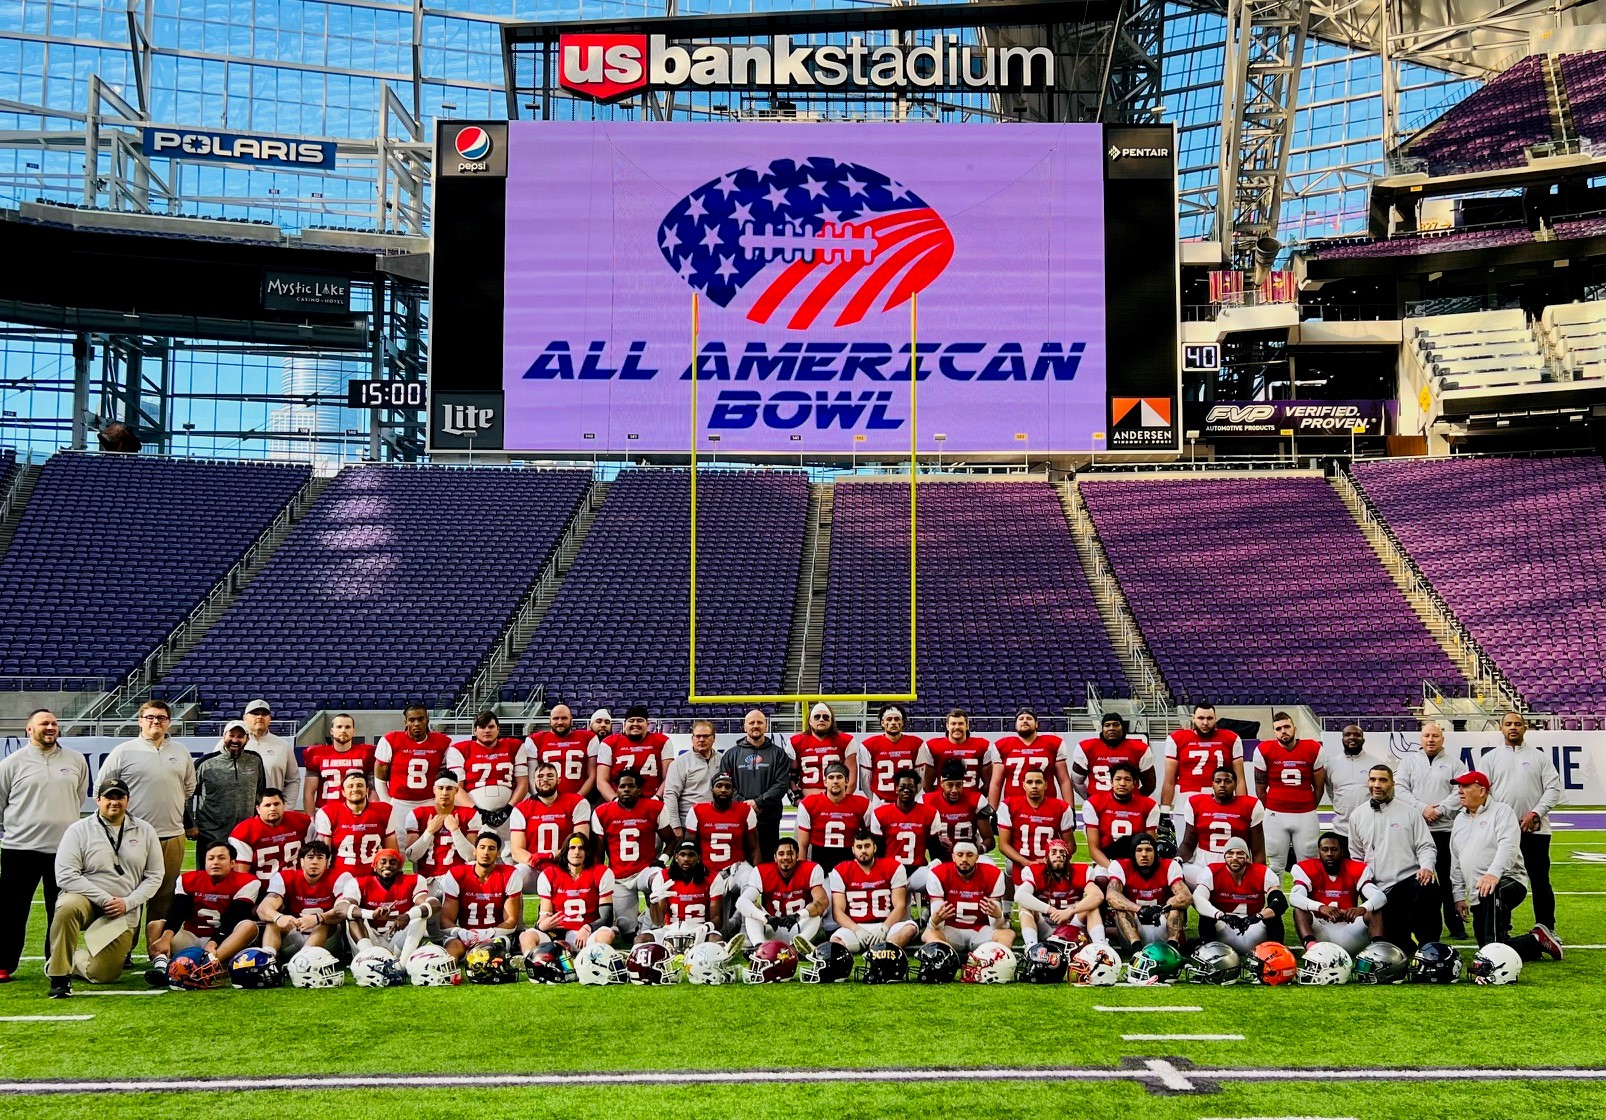 All American bowl All Stripes Team at US Bank Stadium